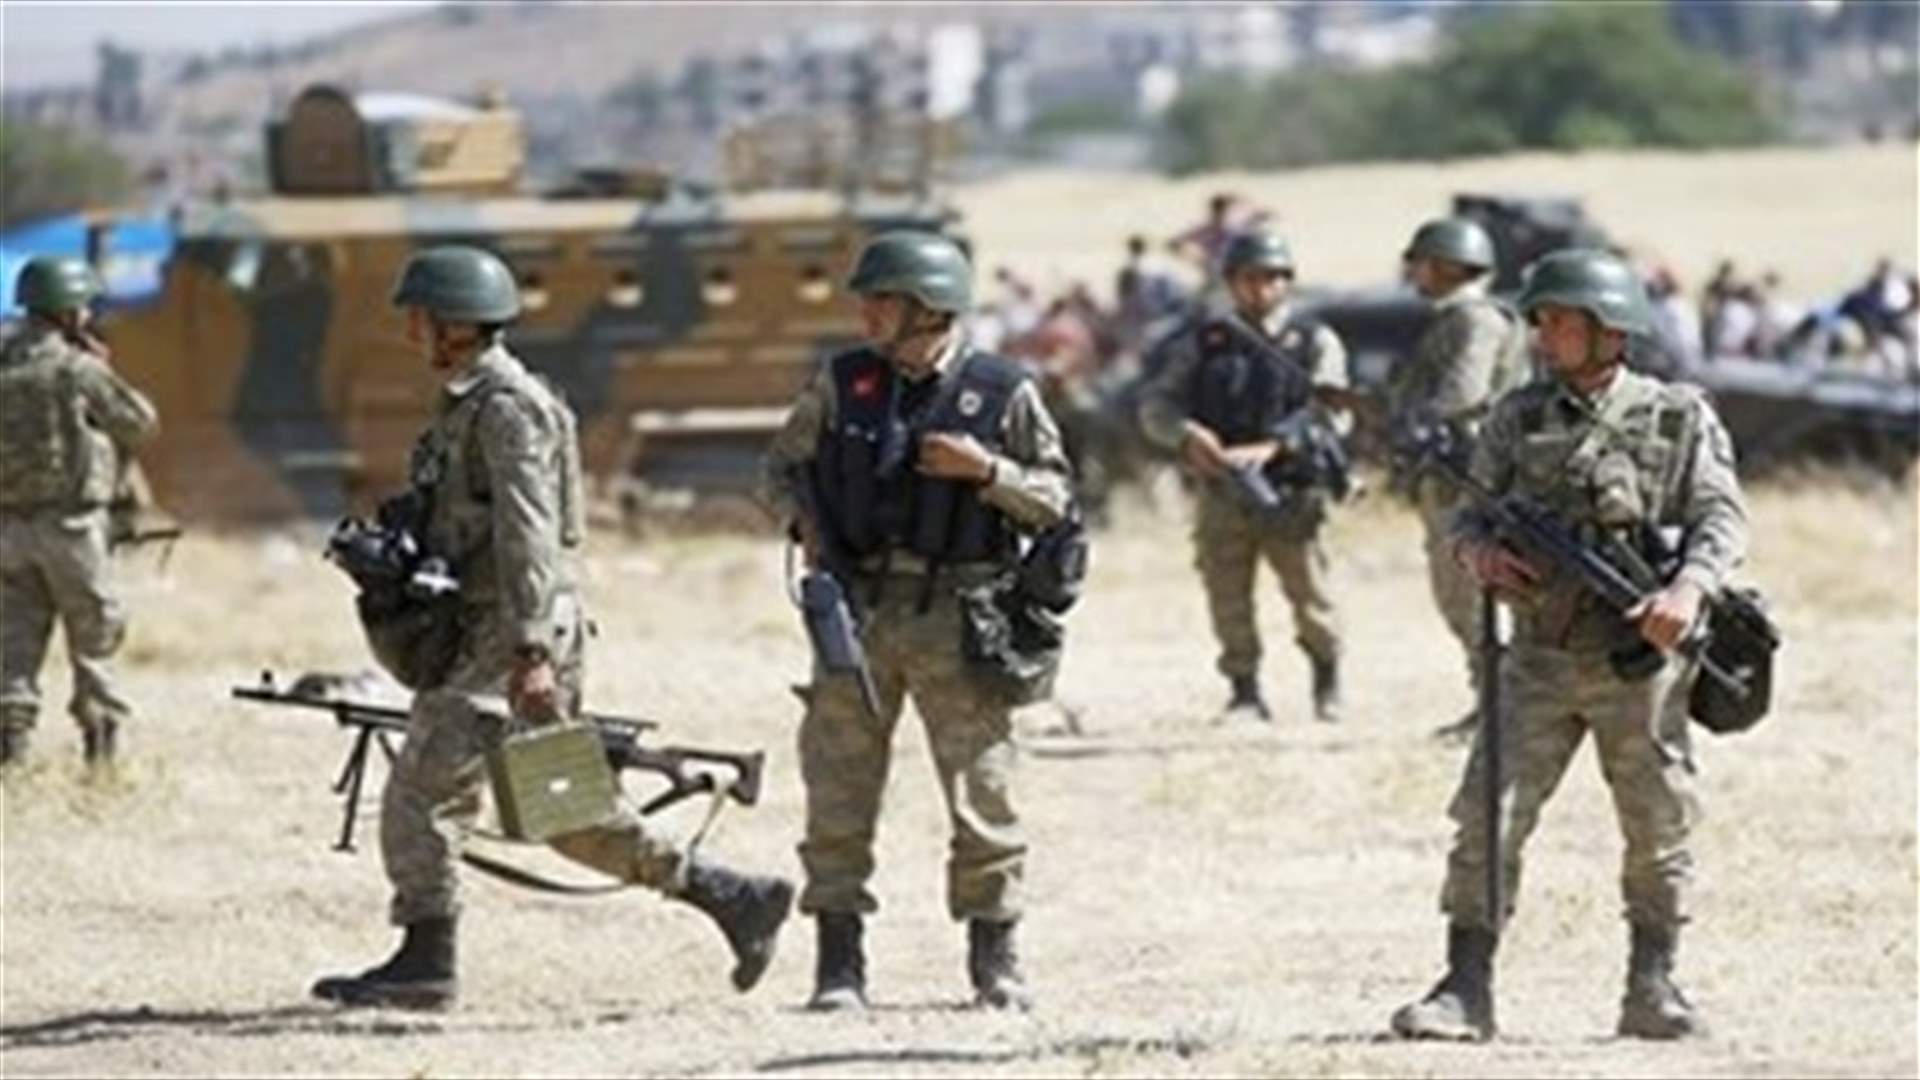 Two Turkish soldiers die in blast on Syrian border - sources